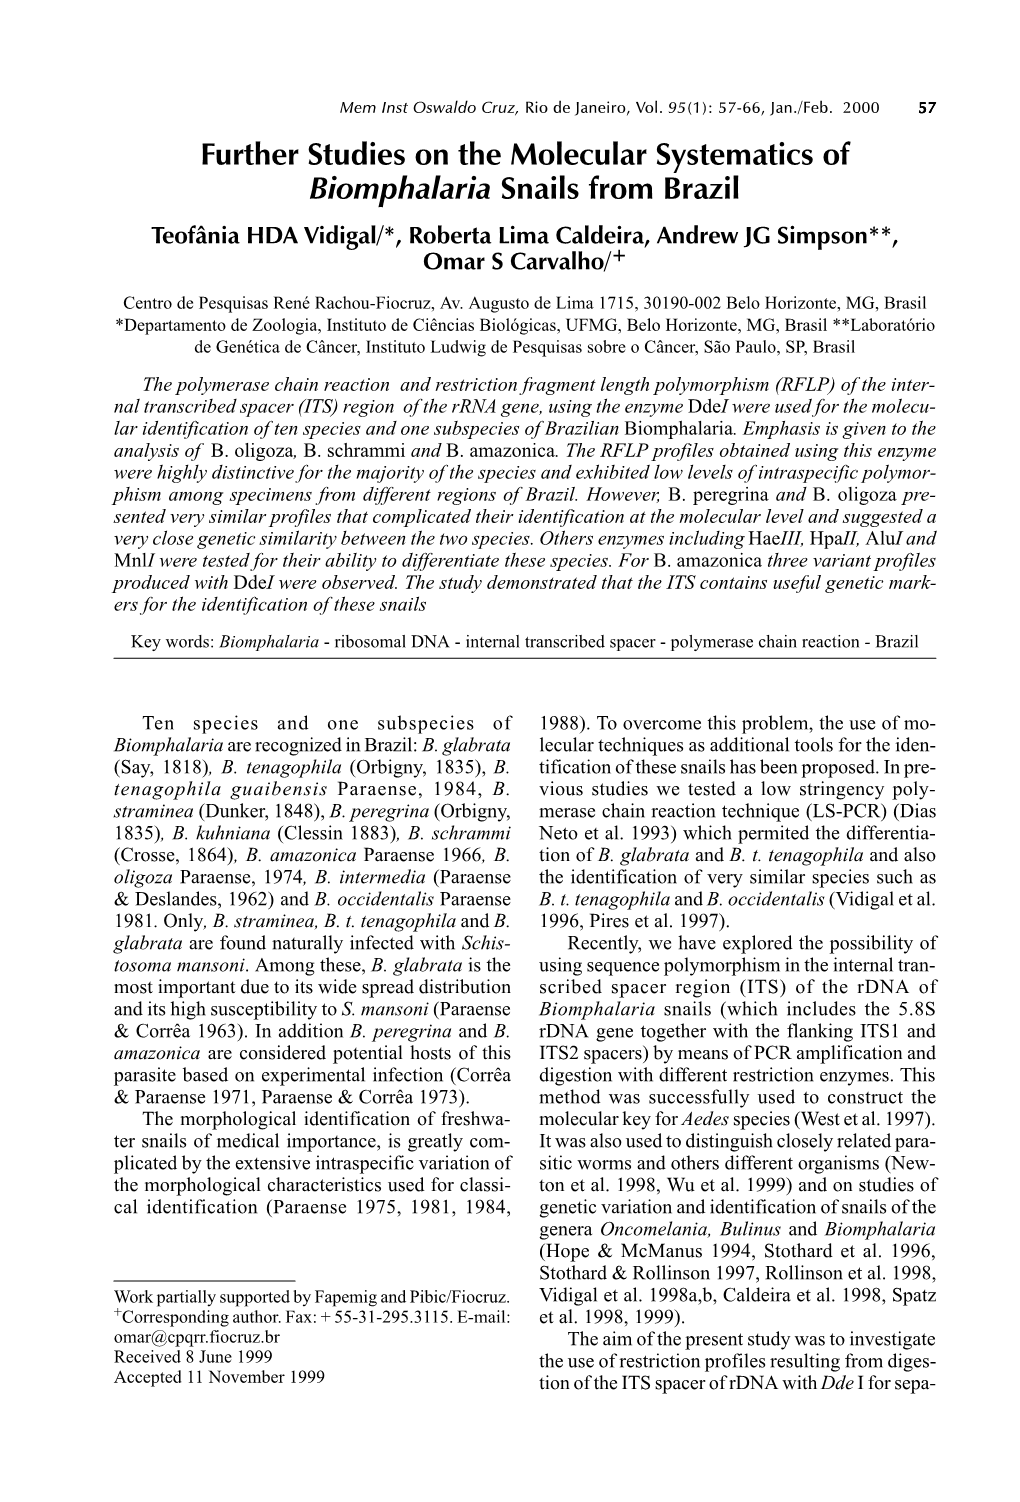 Further Studies on the Molecular Systematics of Biomphalaria Snails from Brazil Teofânia HDA Vidigal/*, Roberta Lima Caldeira, Andrew JG Simpson**, Omar S Carvalho/+